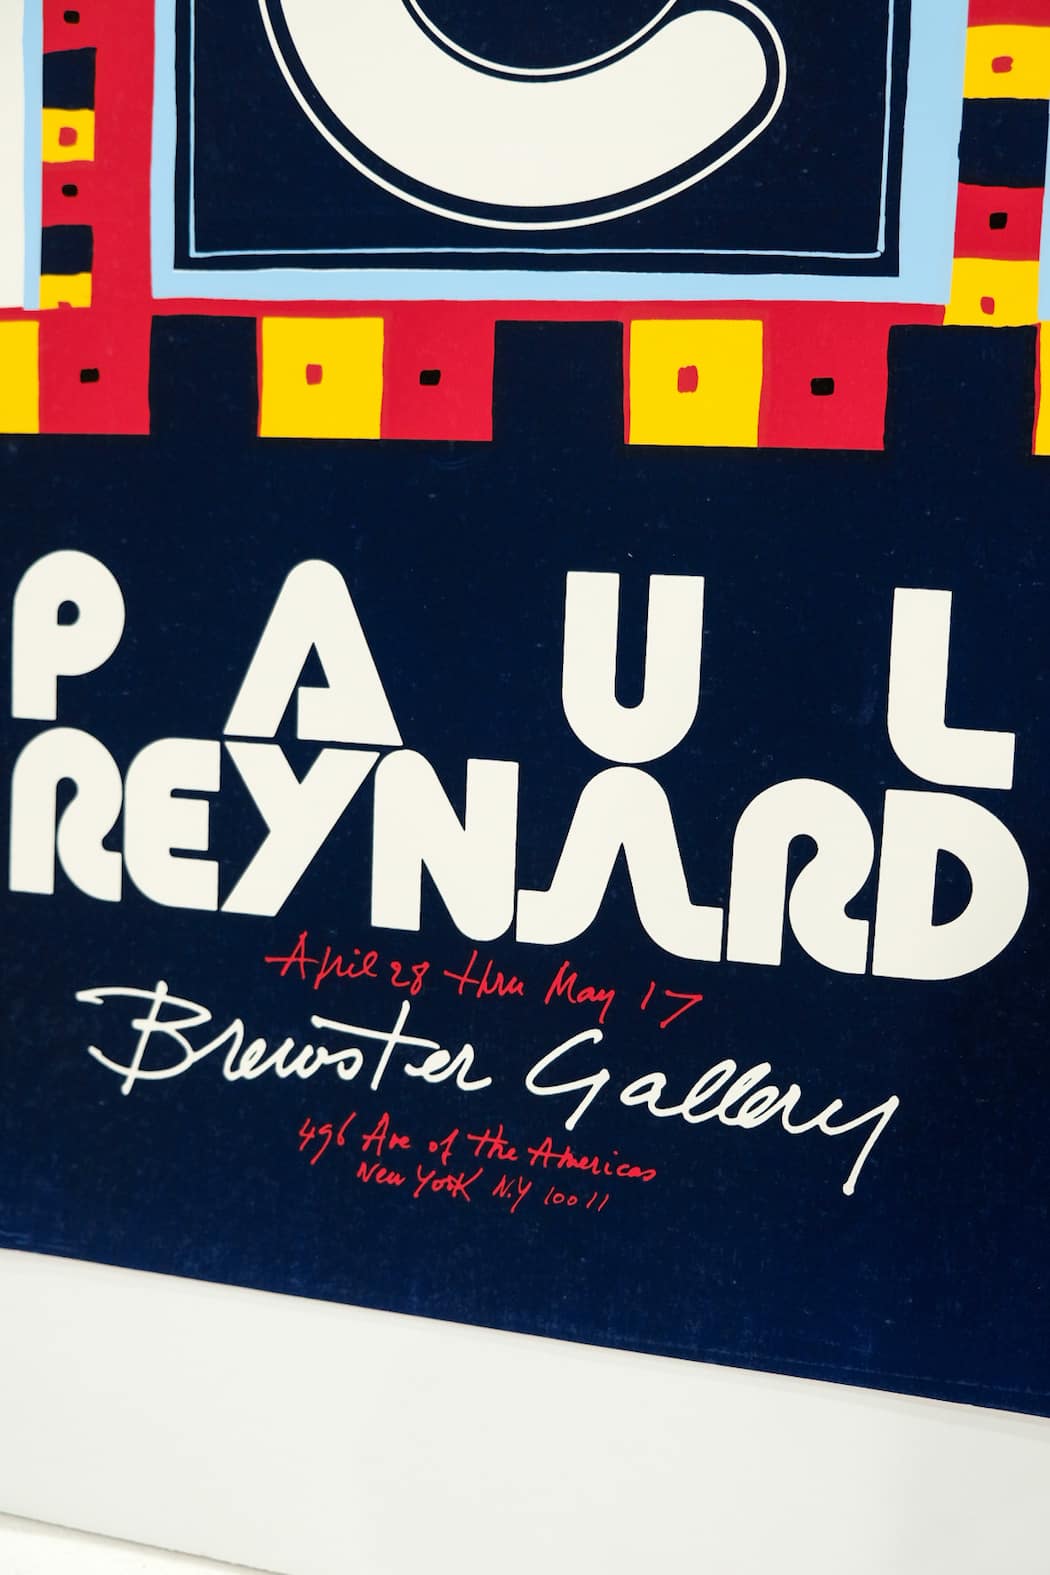 Paul Reynard Exhibition Screenprint at Brewster Gallery